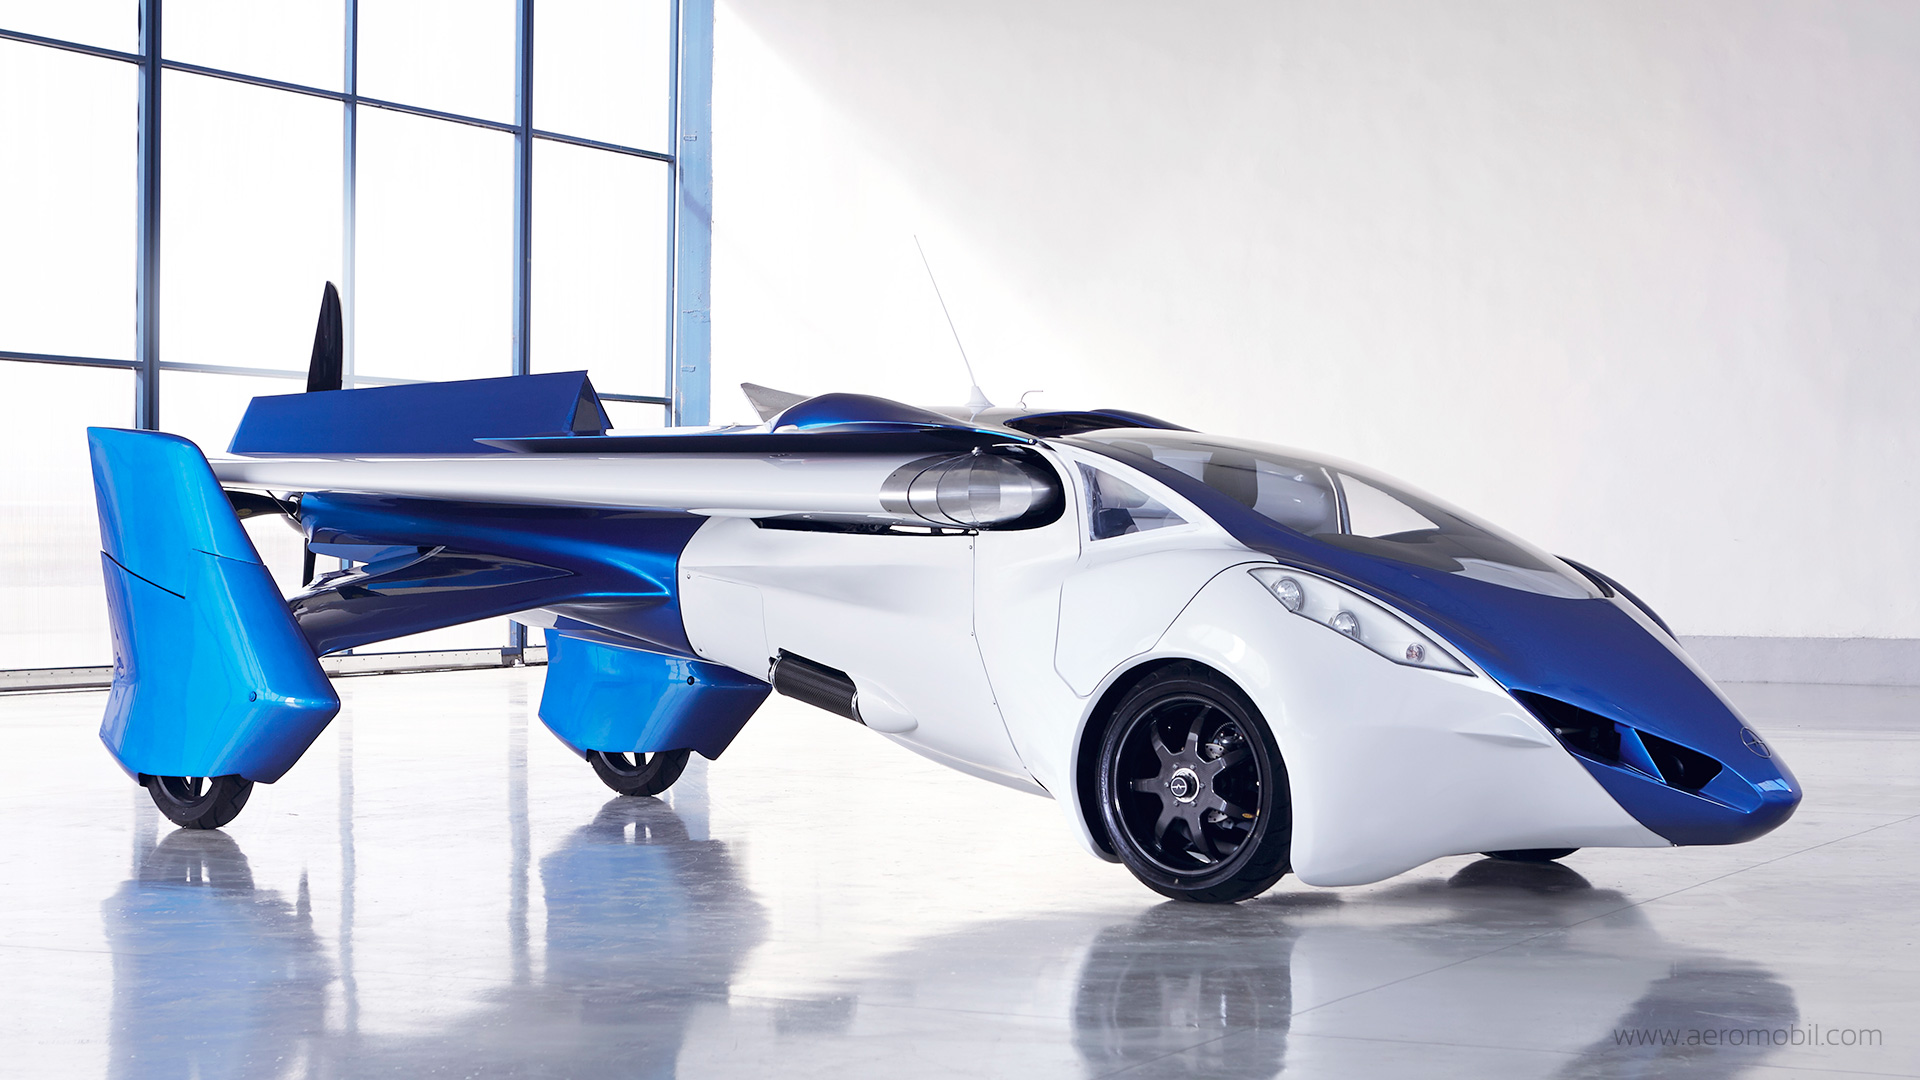 Словашка компания представи летящ автомобил (снимки)